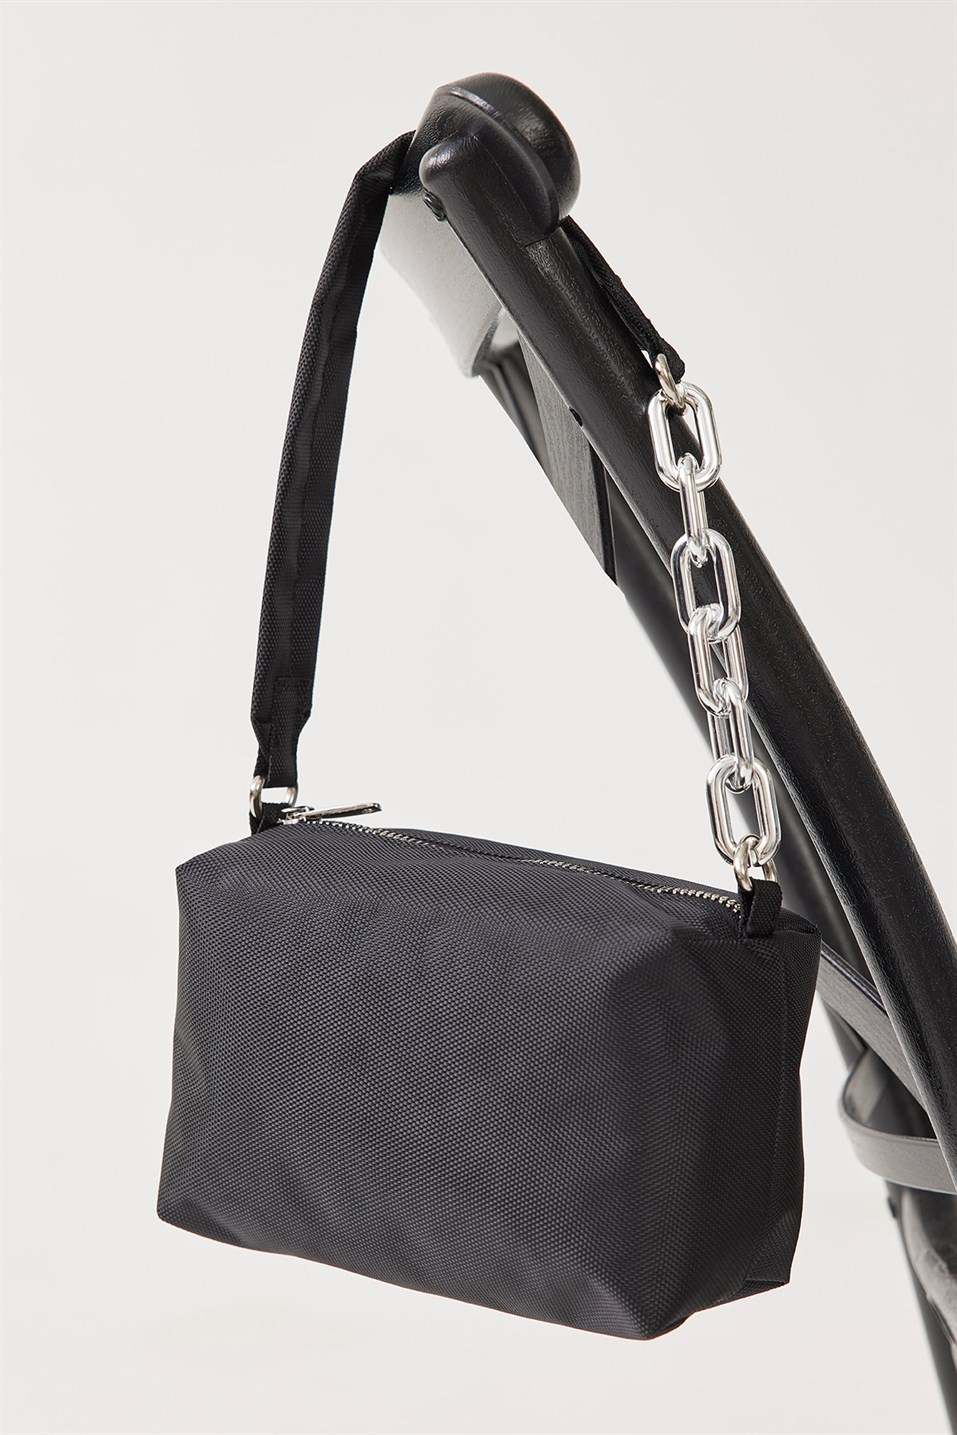 Black Chain Fabric Handle Bag